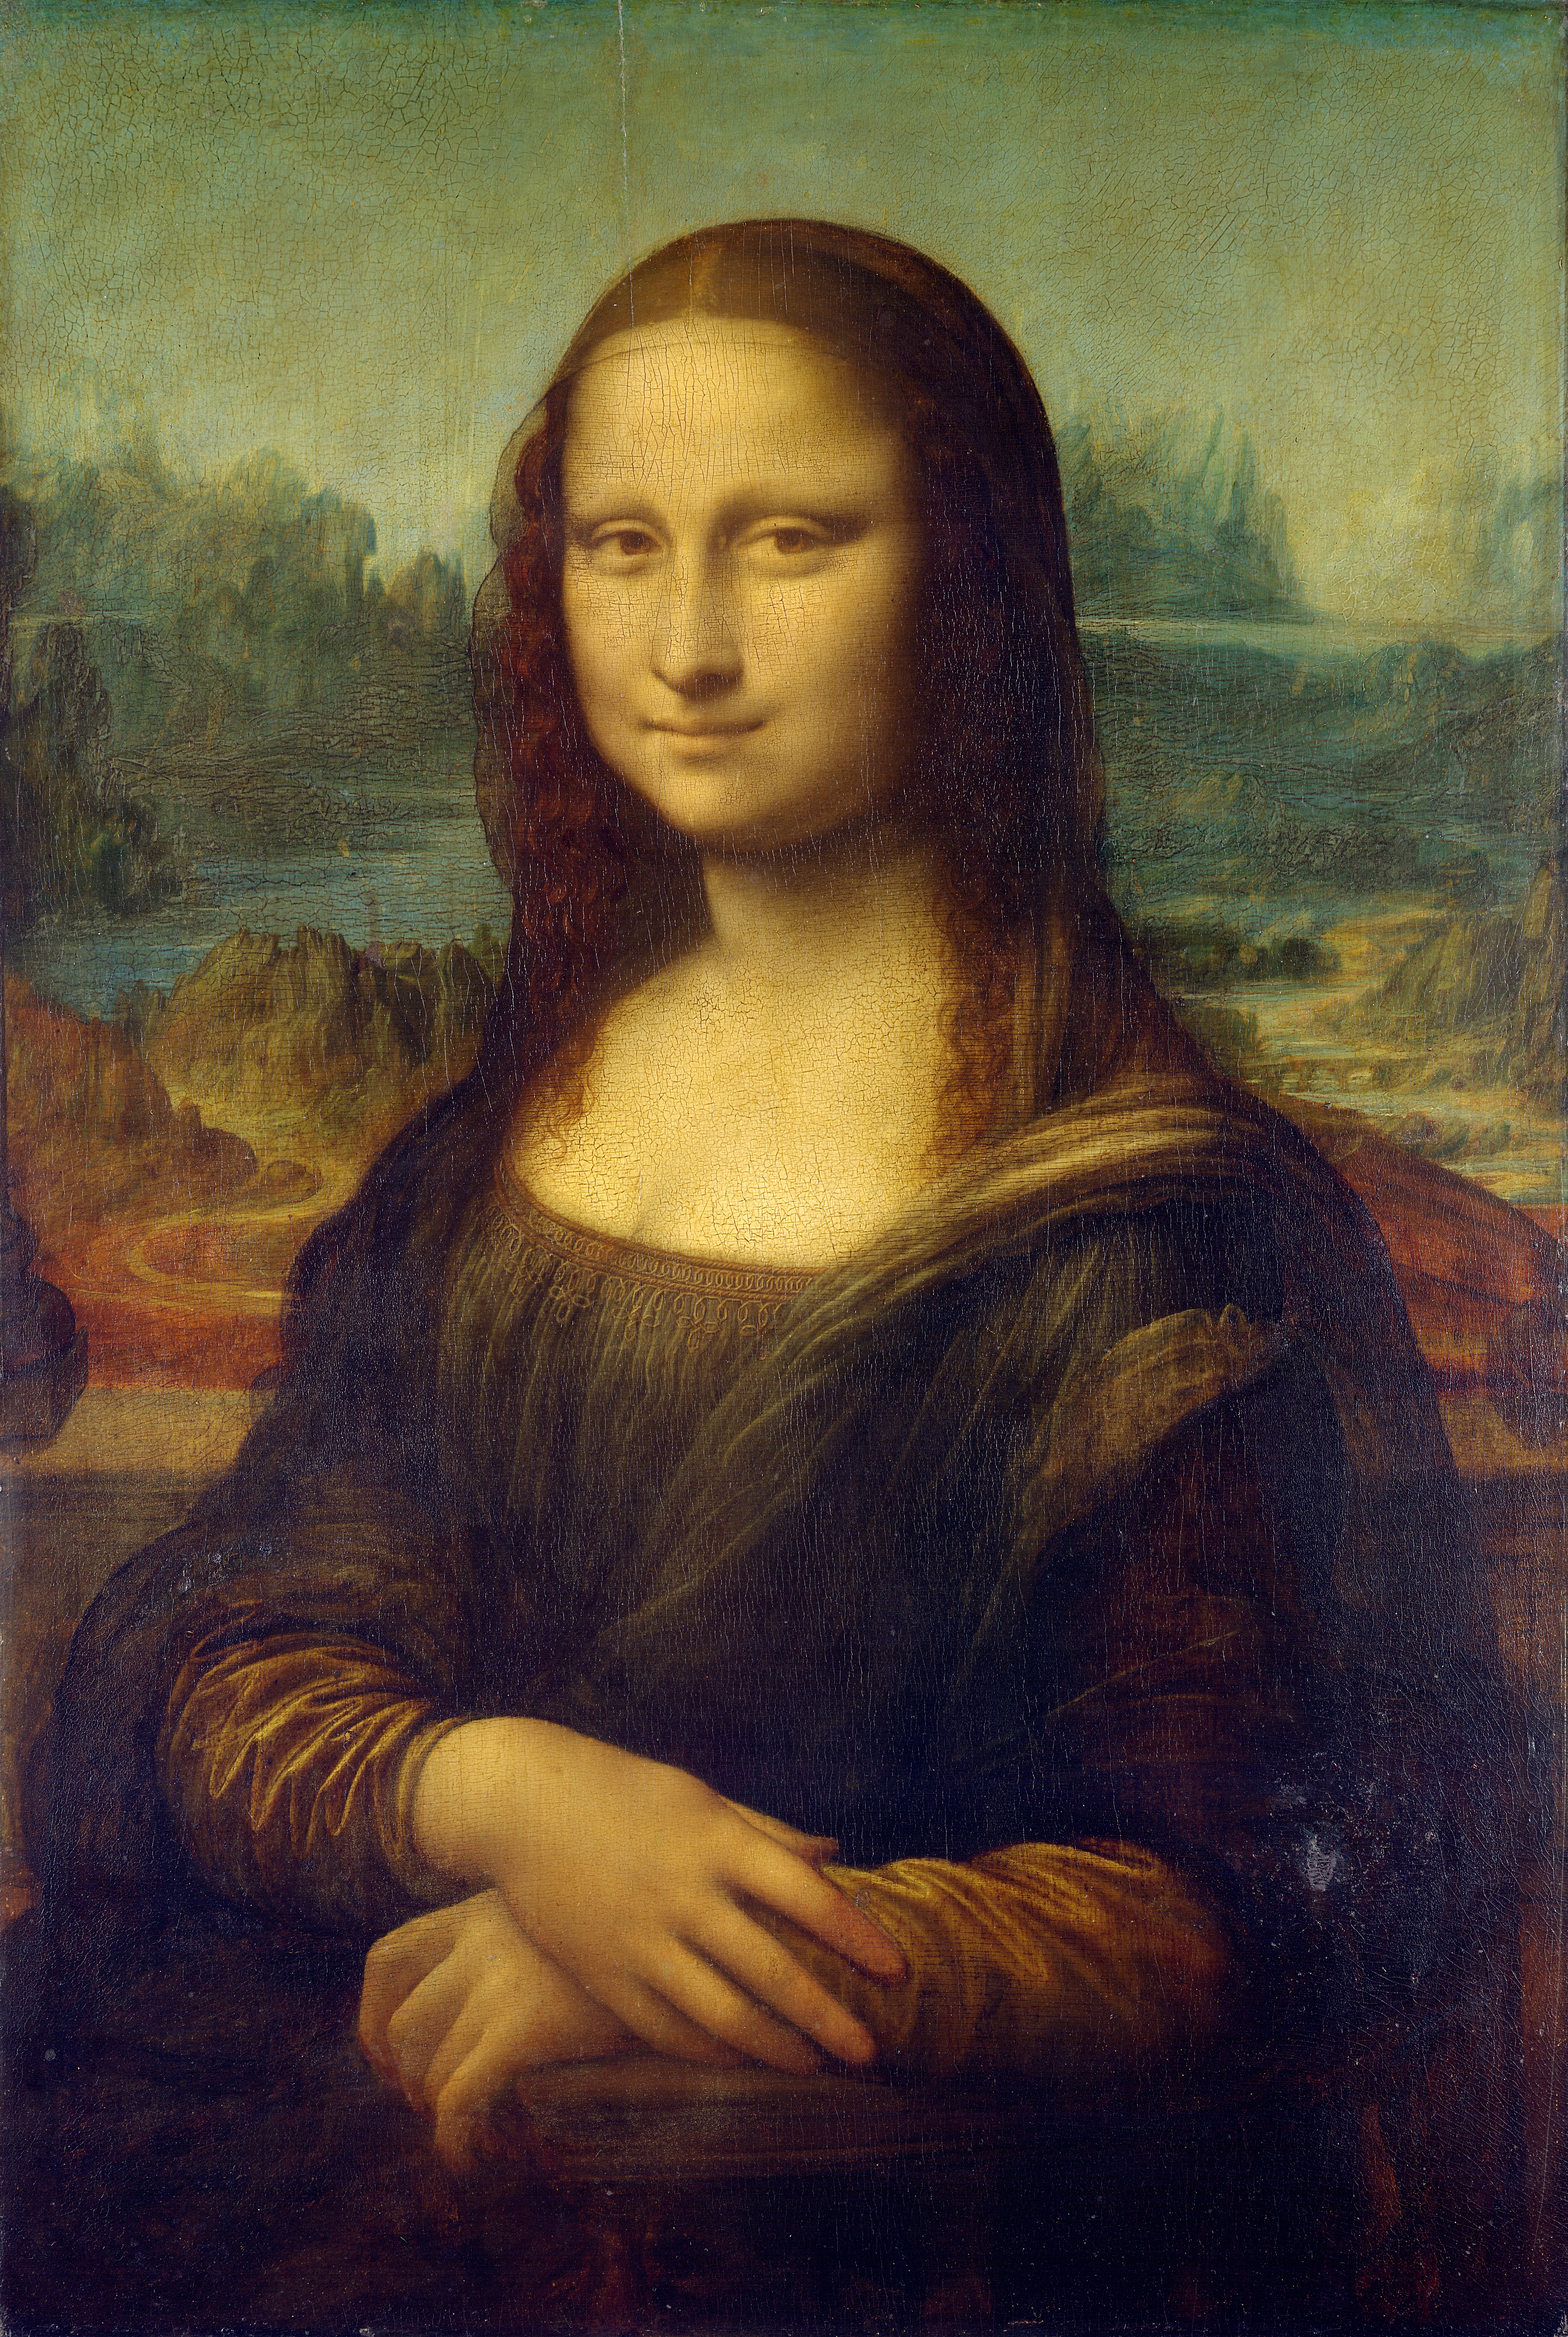 https://upload.wikimedia.org/wikipedia/commons/e/ec/Mona_Lisa%2C_by_Leonardo_da_Vinci%2C_from_C2RMF_retouched.jpg